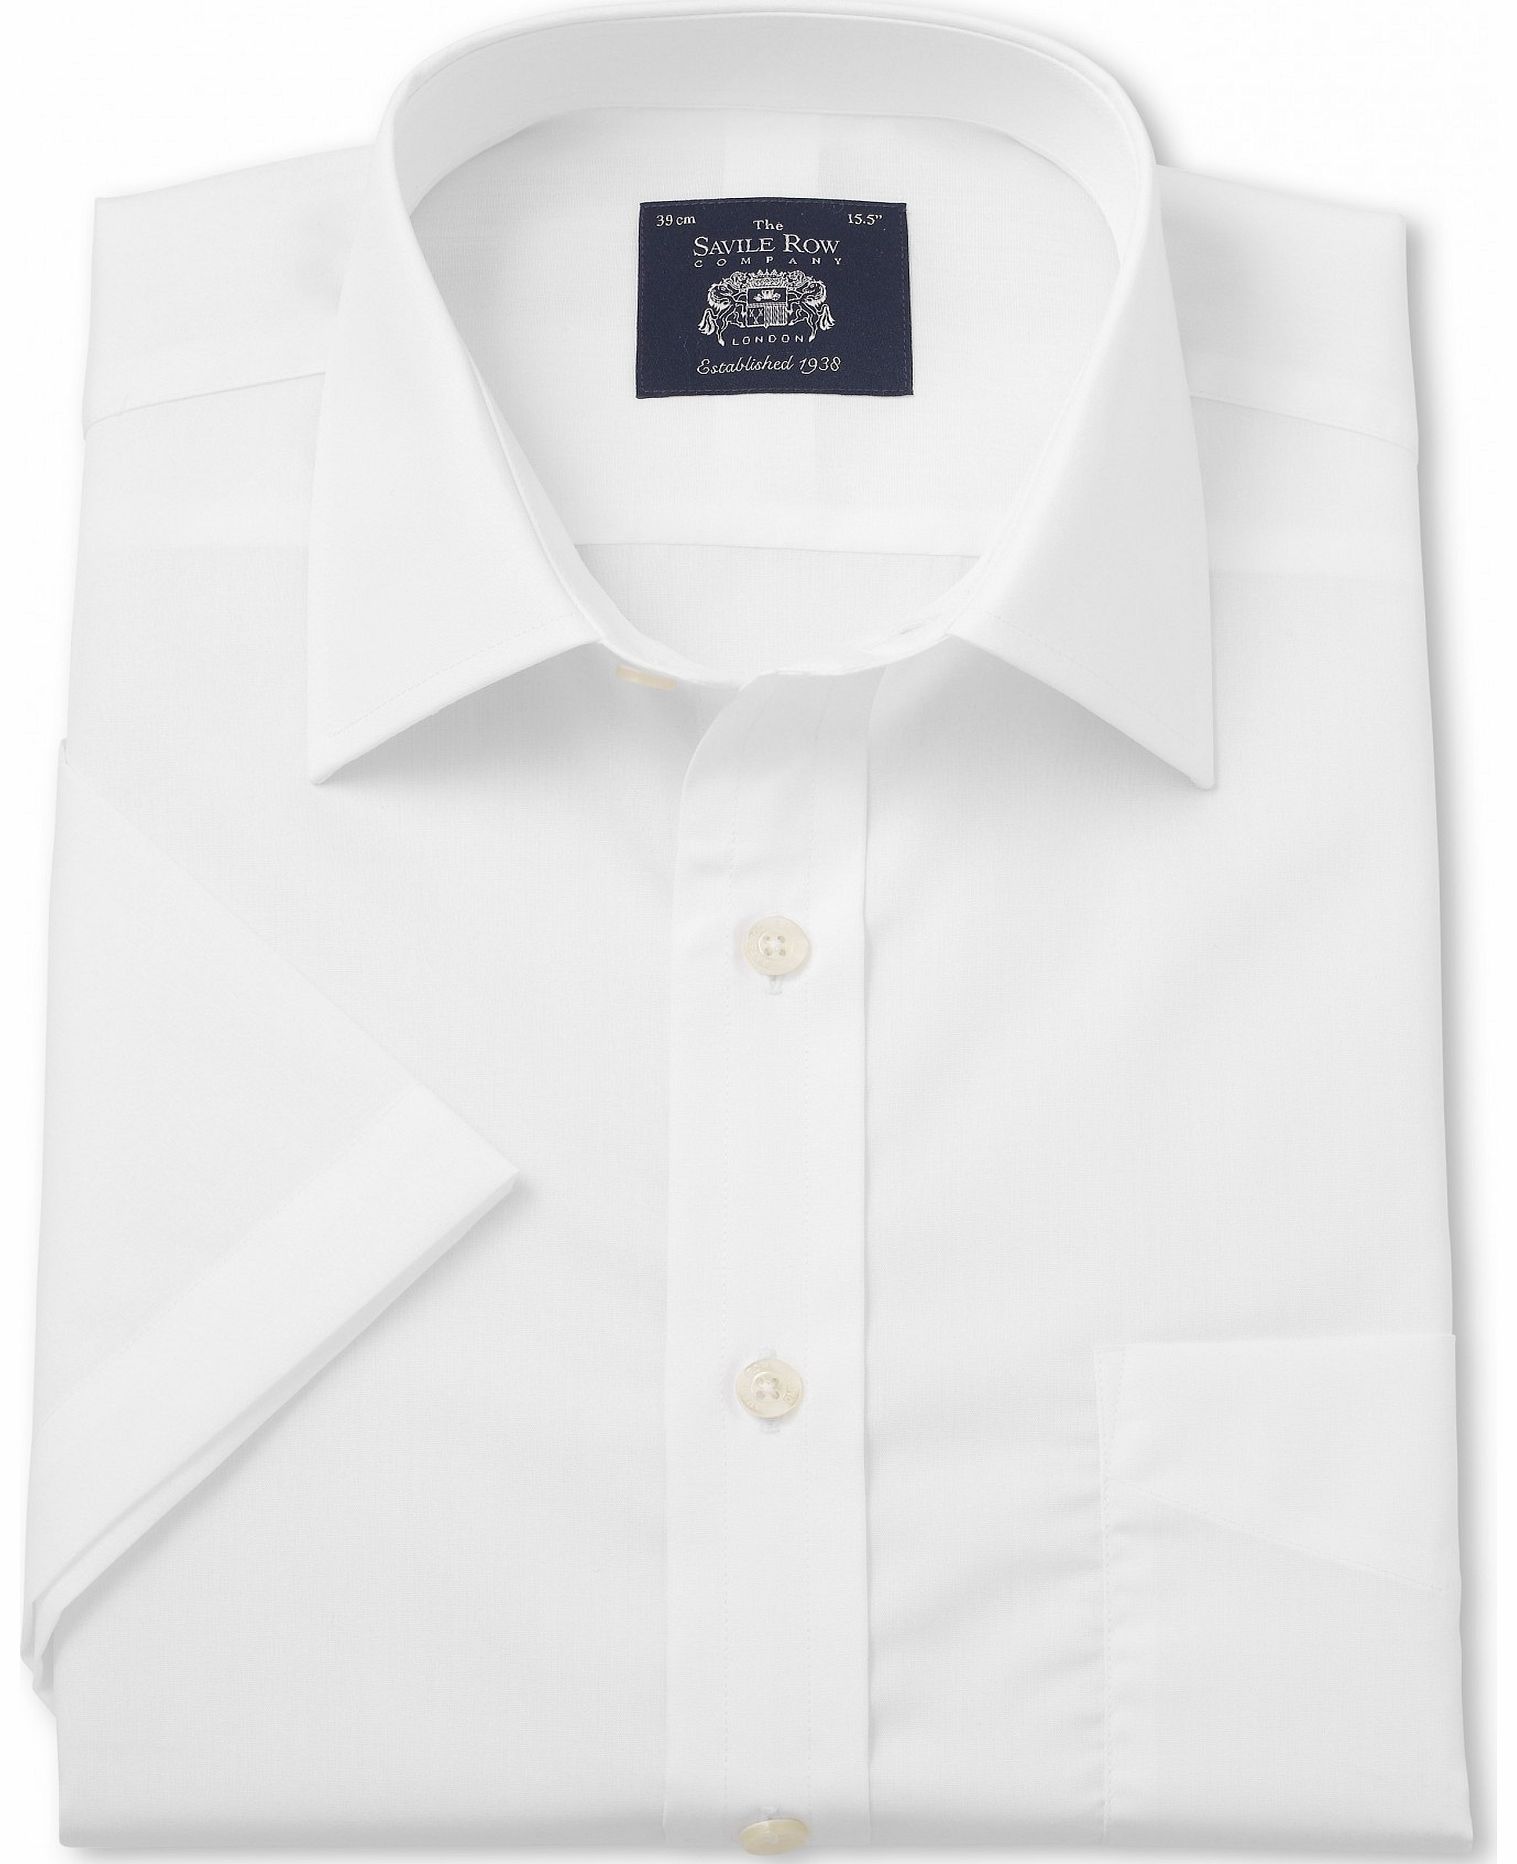 Savile Row Company White Poplin Classic Fit Short Sleeve Shirt 19